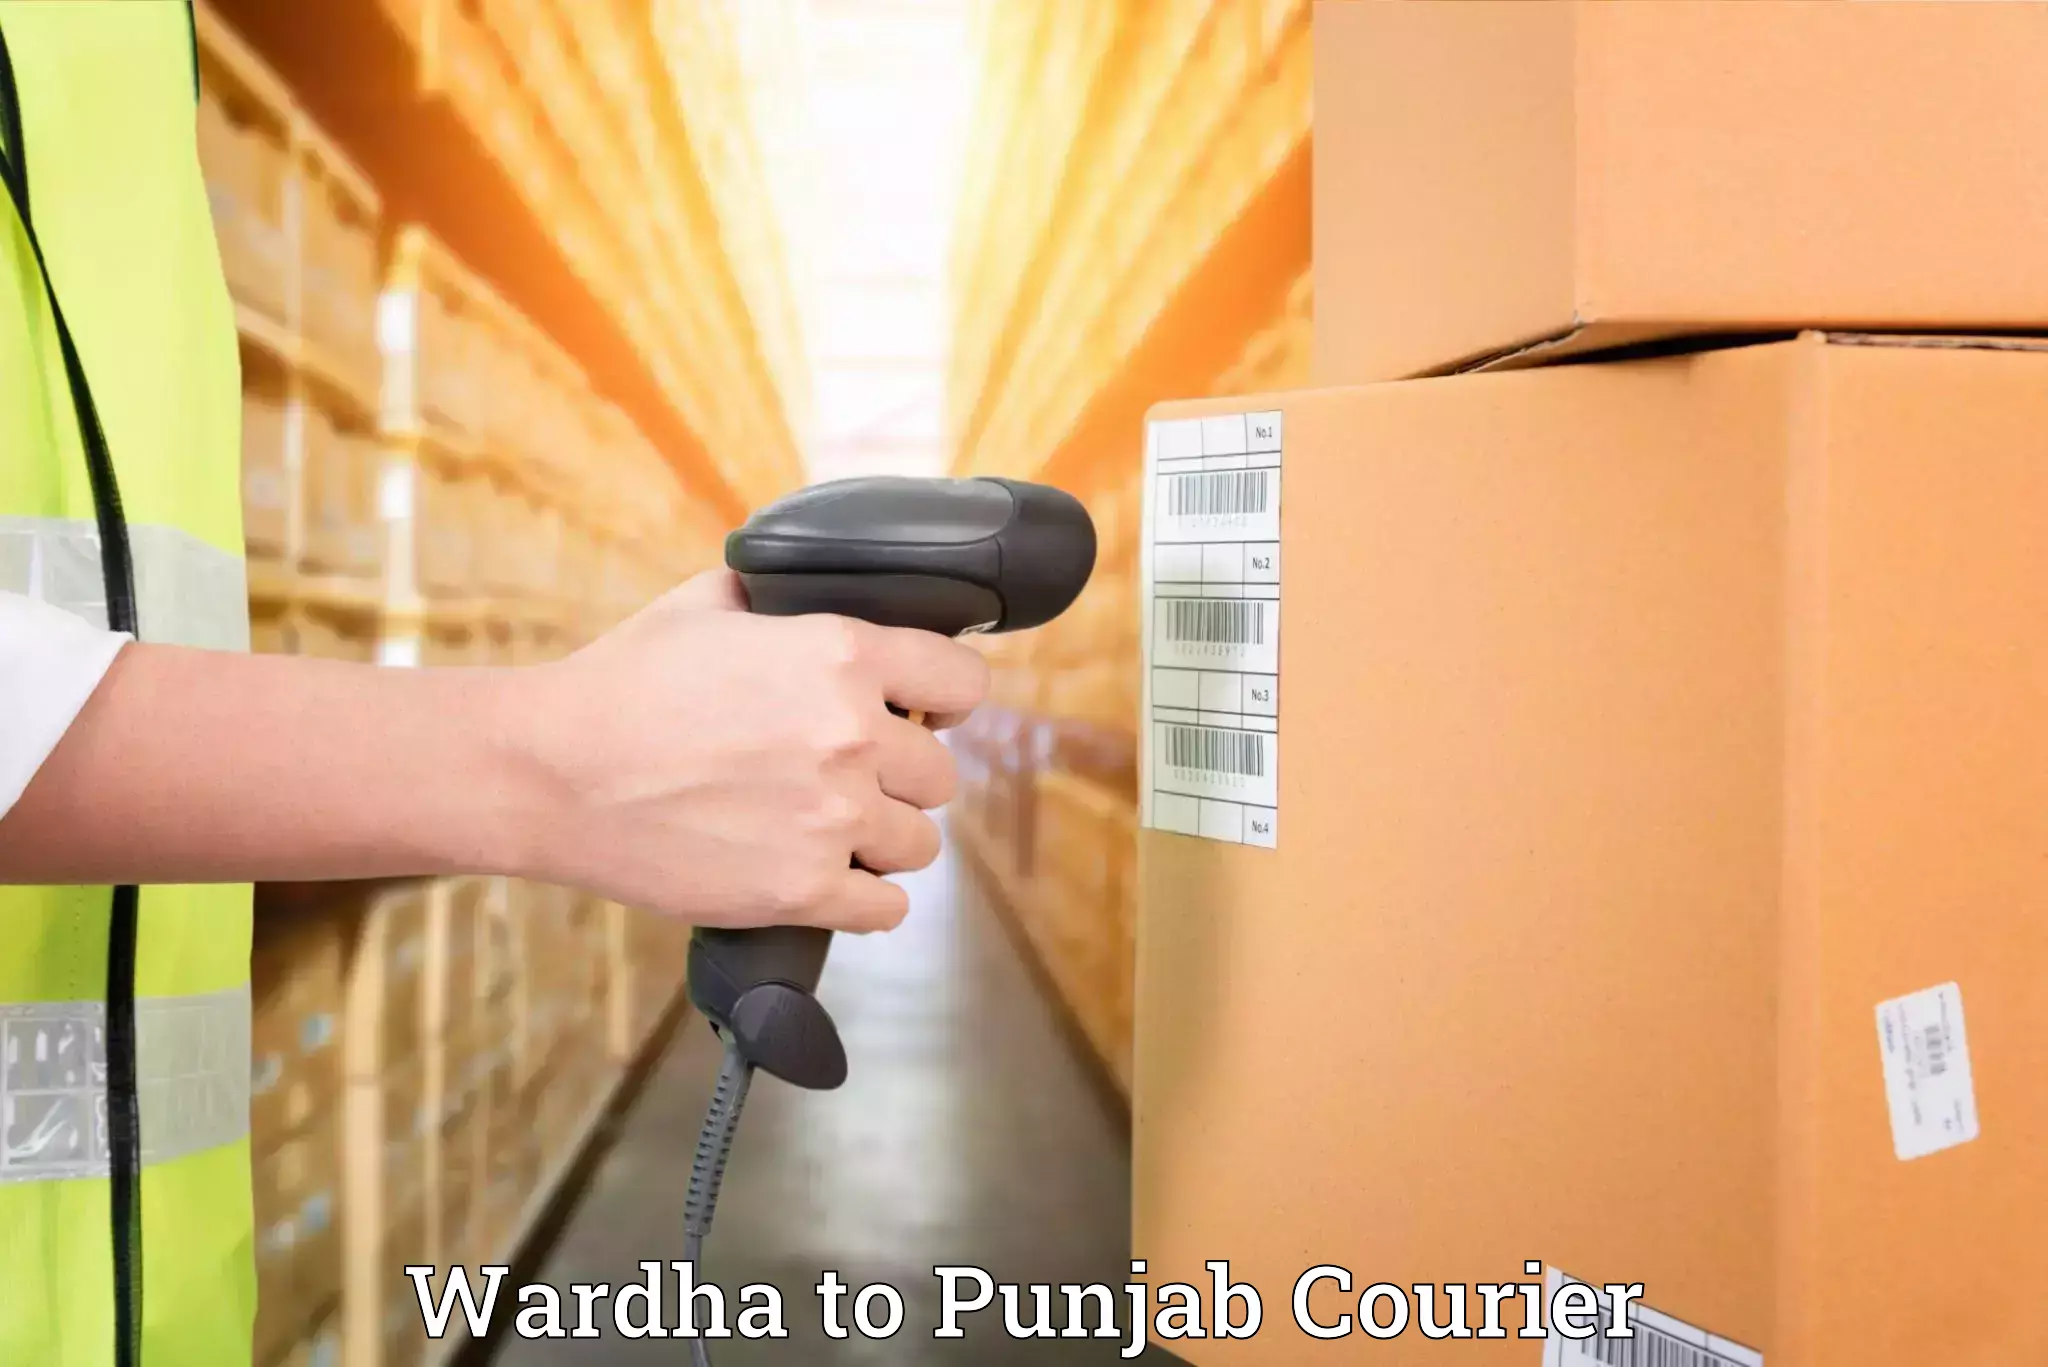 Quality moving company Wardha to Punjab